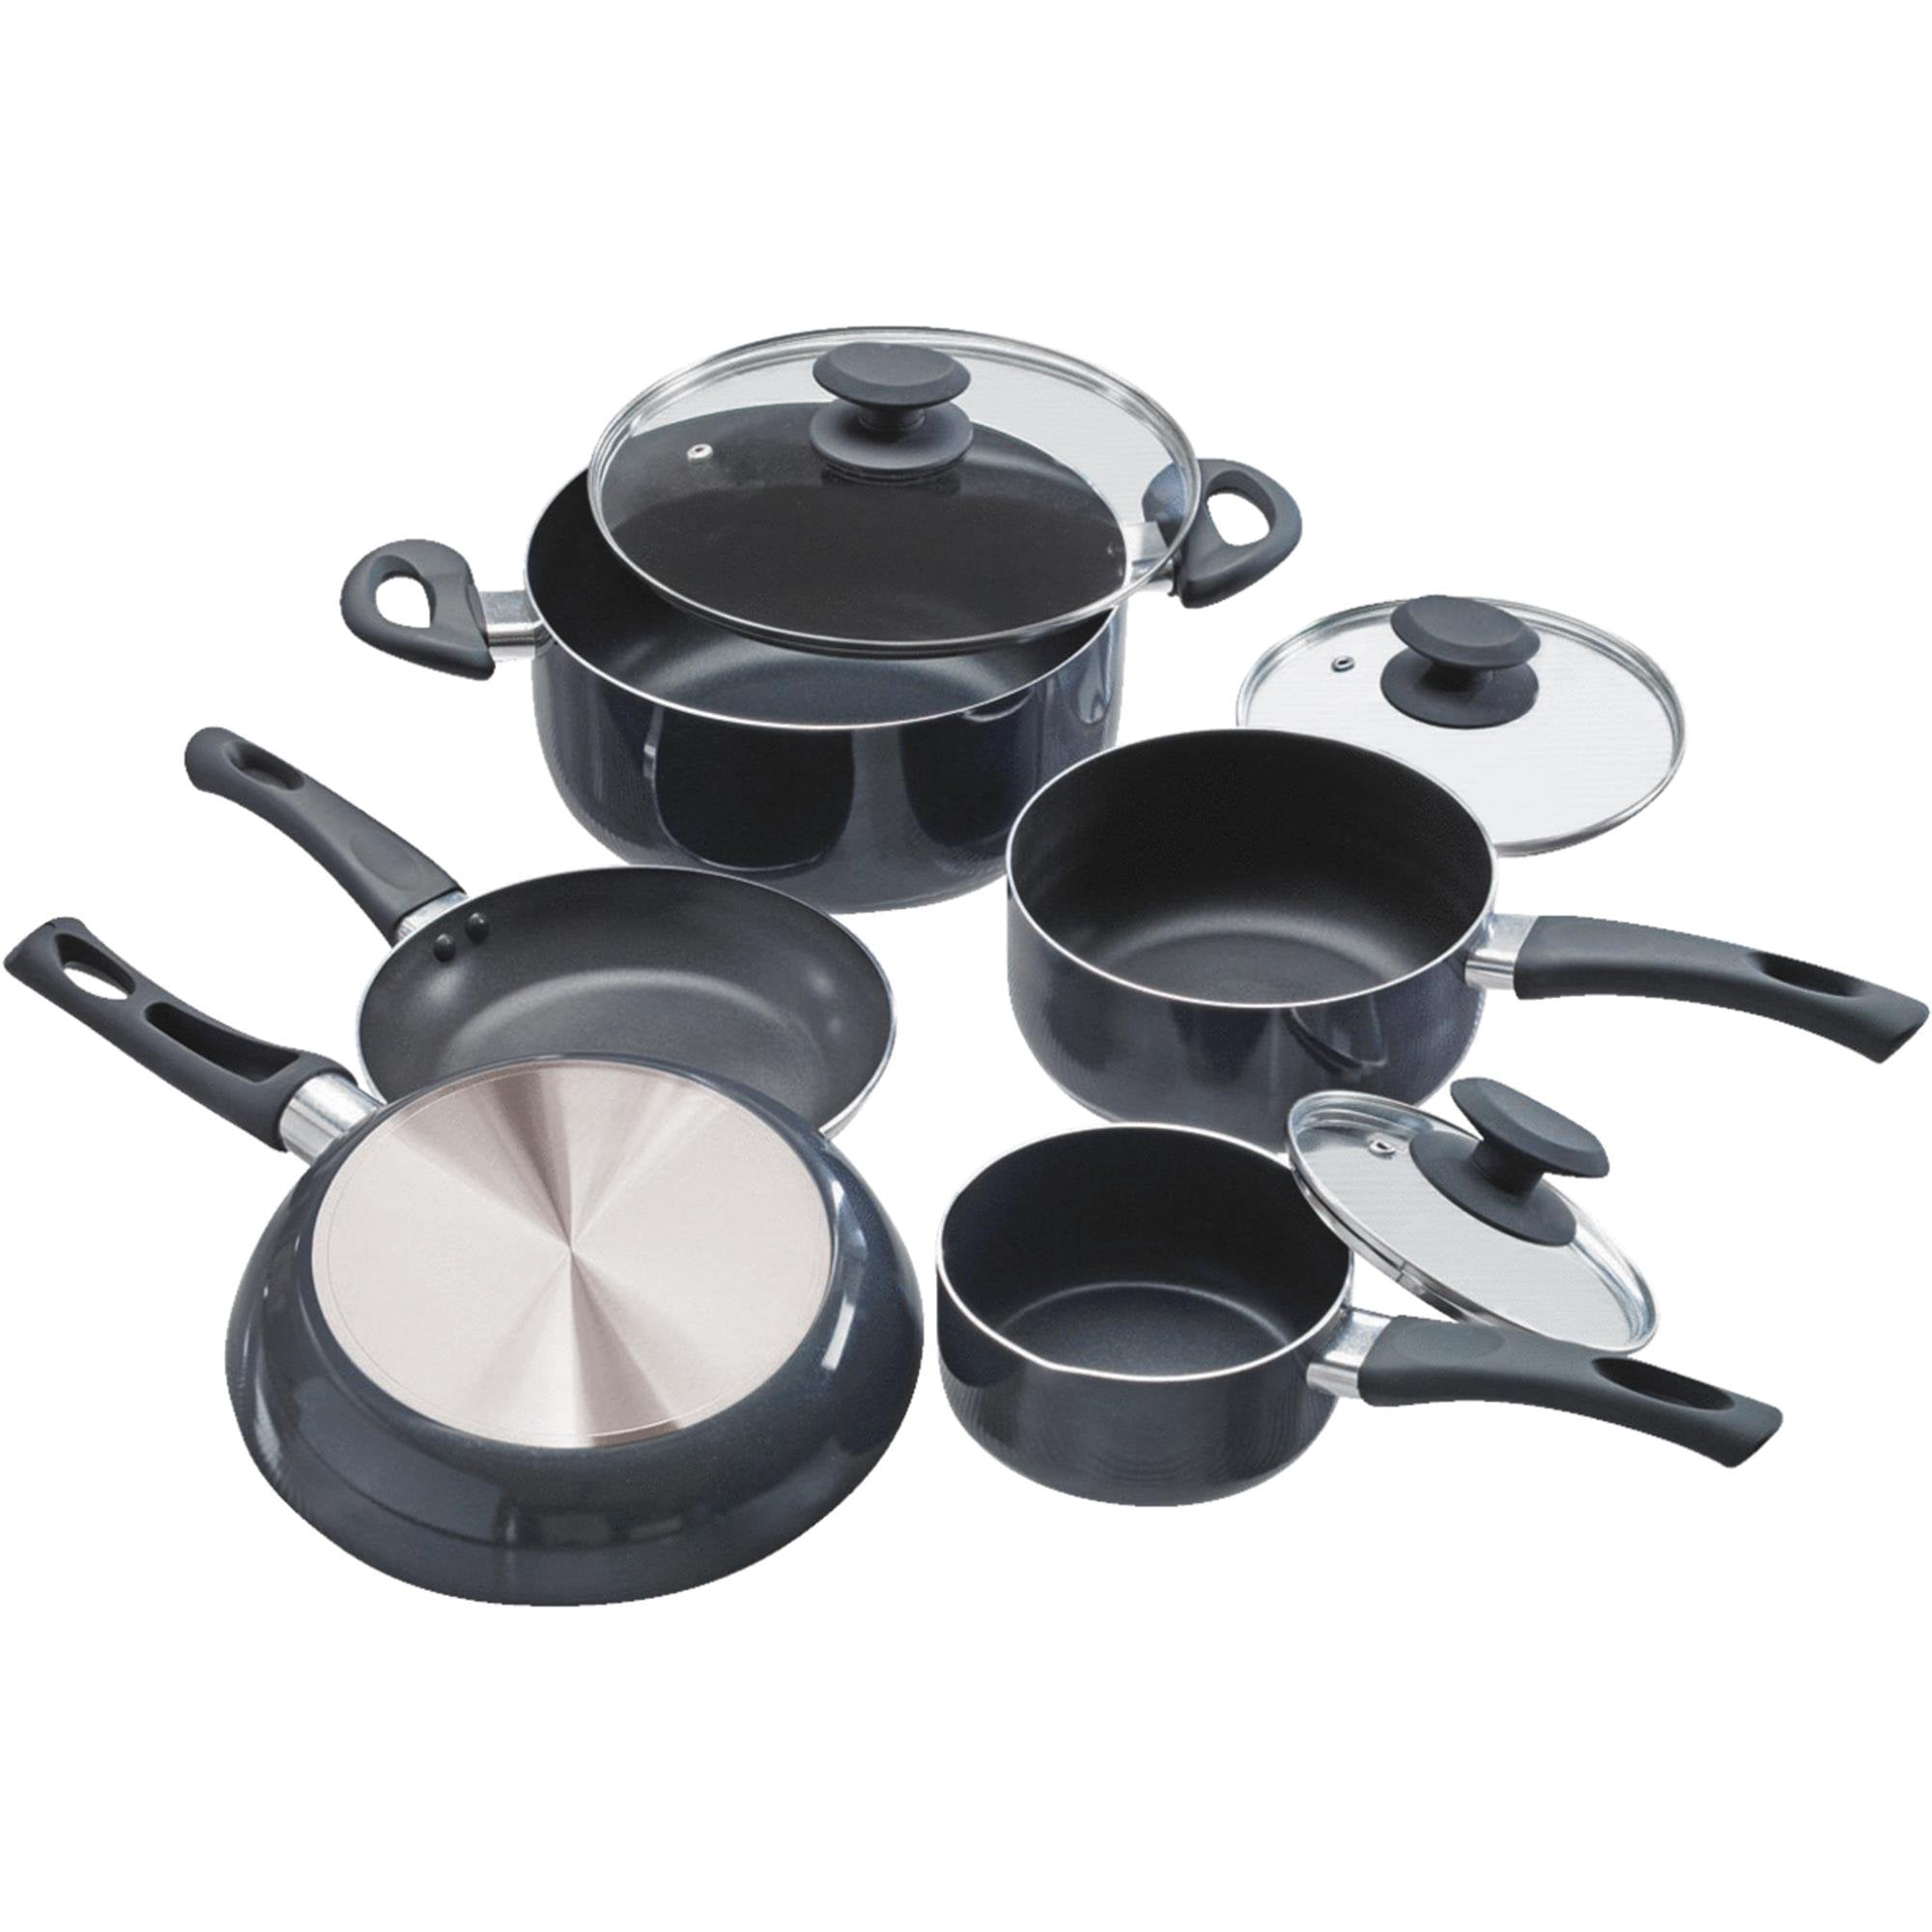  LloydPans Kitchenware 8 Piece Cookware Set, Non-Toxic